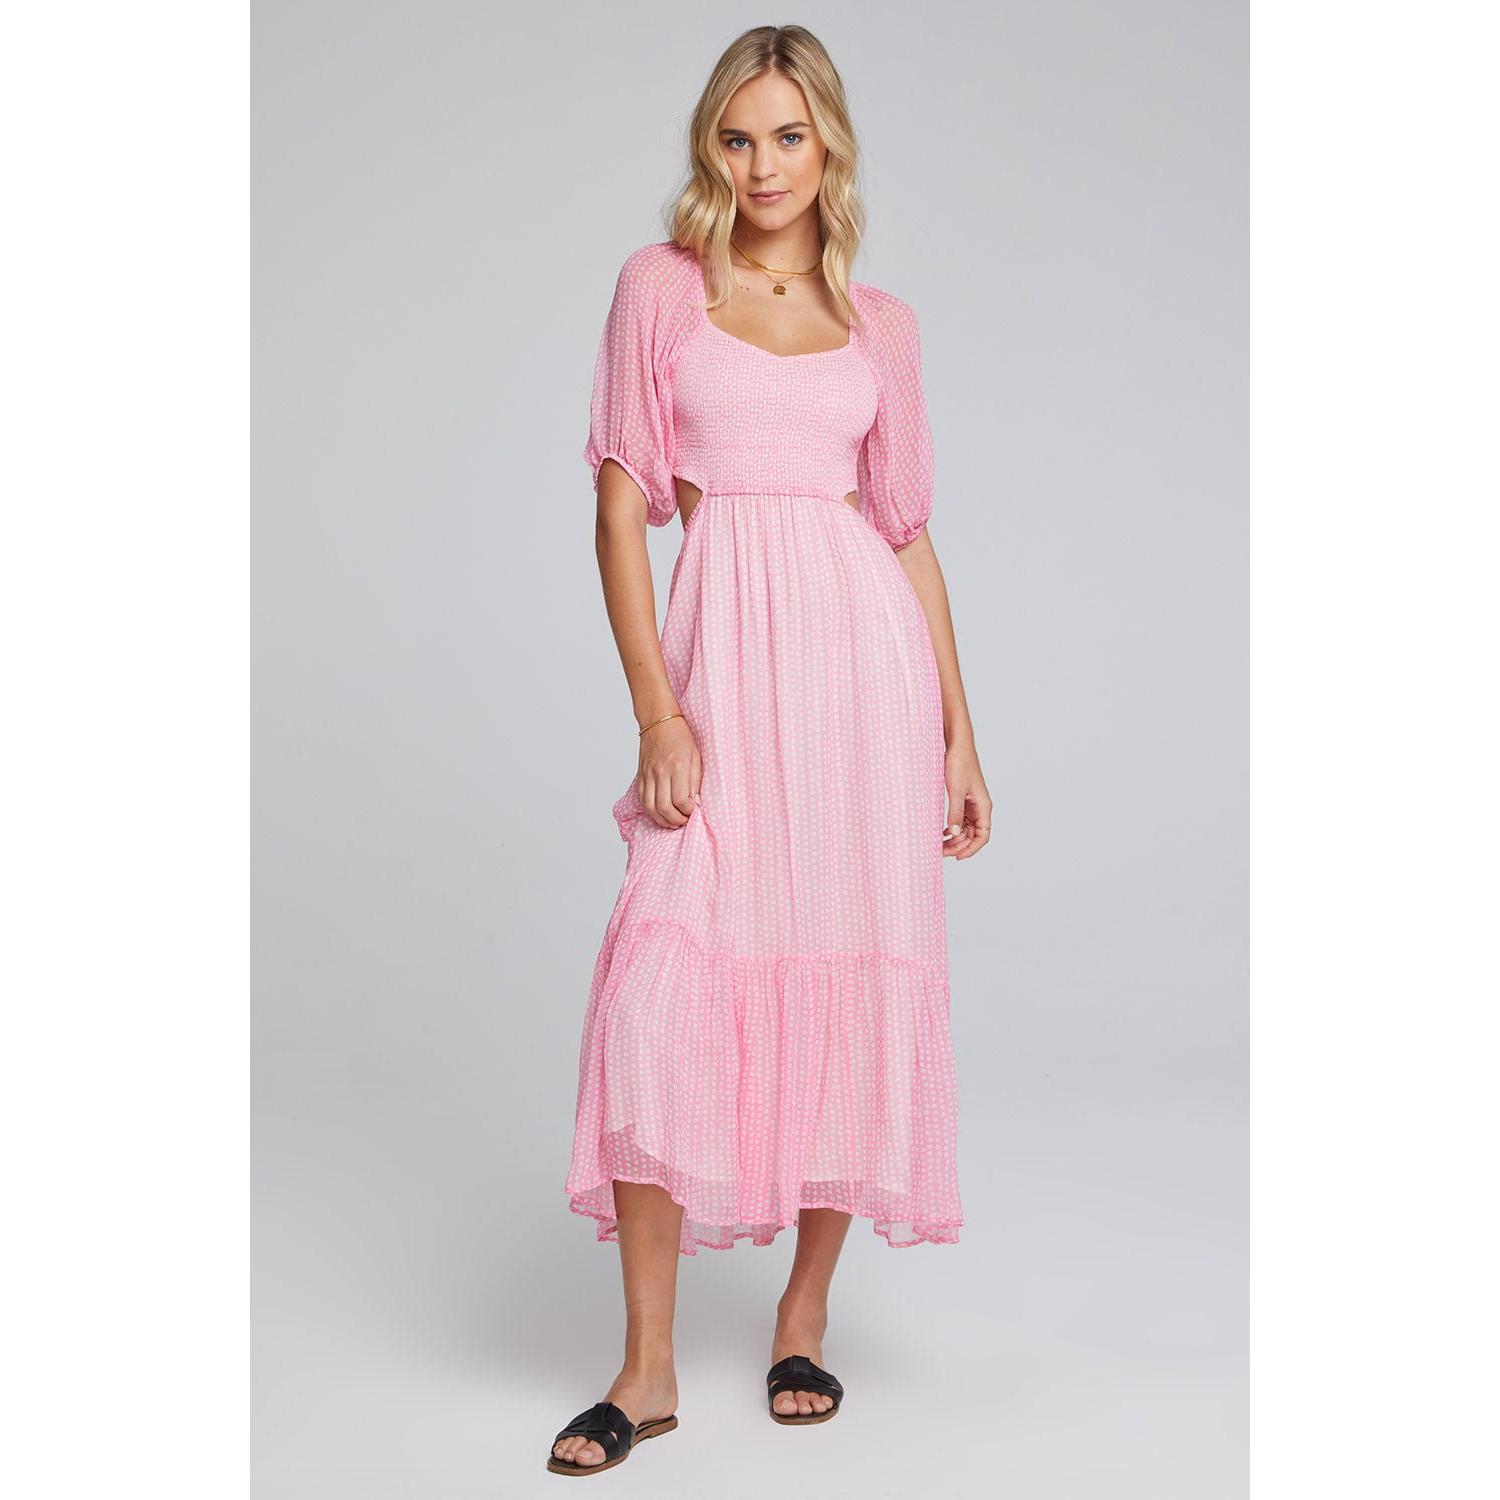 Saltwater Luxe - Carlee Midi Dress in Pink-SQ8928060